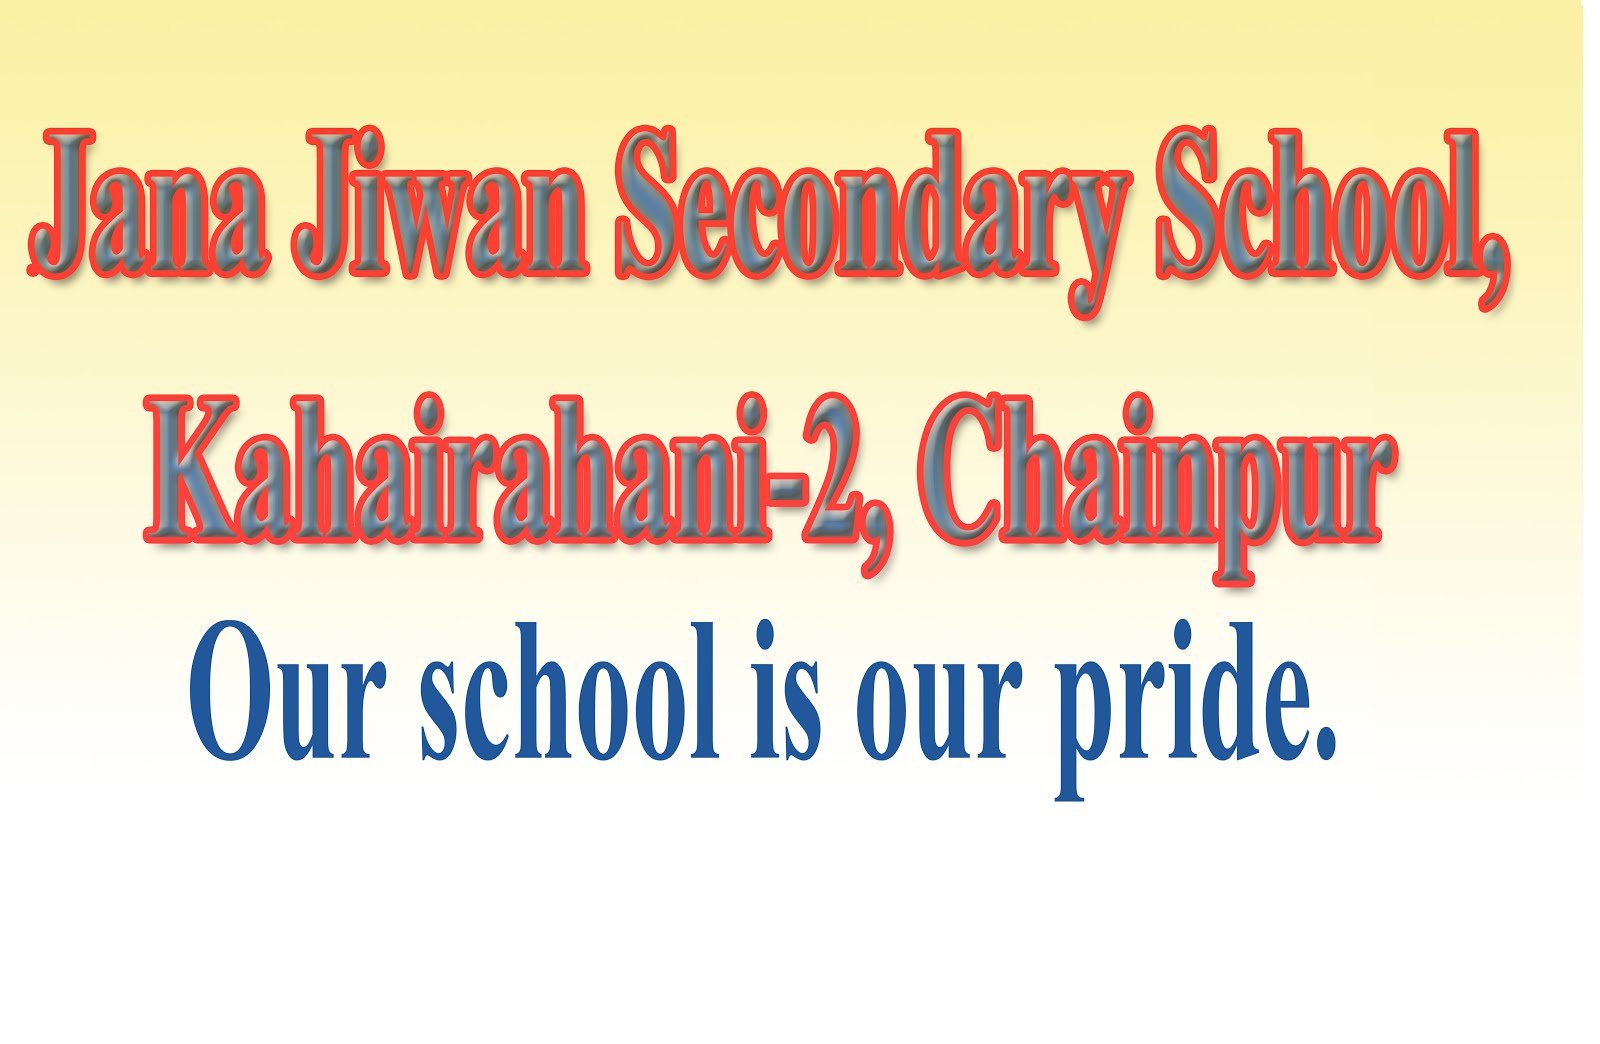 Jana Jiwan Secondary School, Khairahani-2, Chitwan